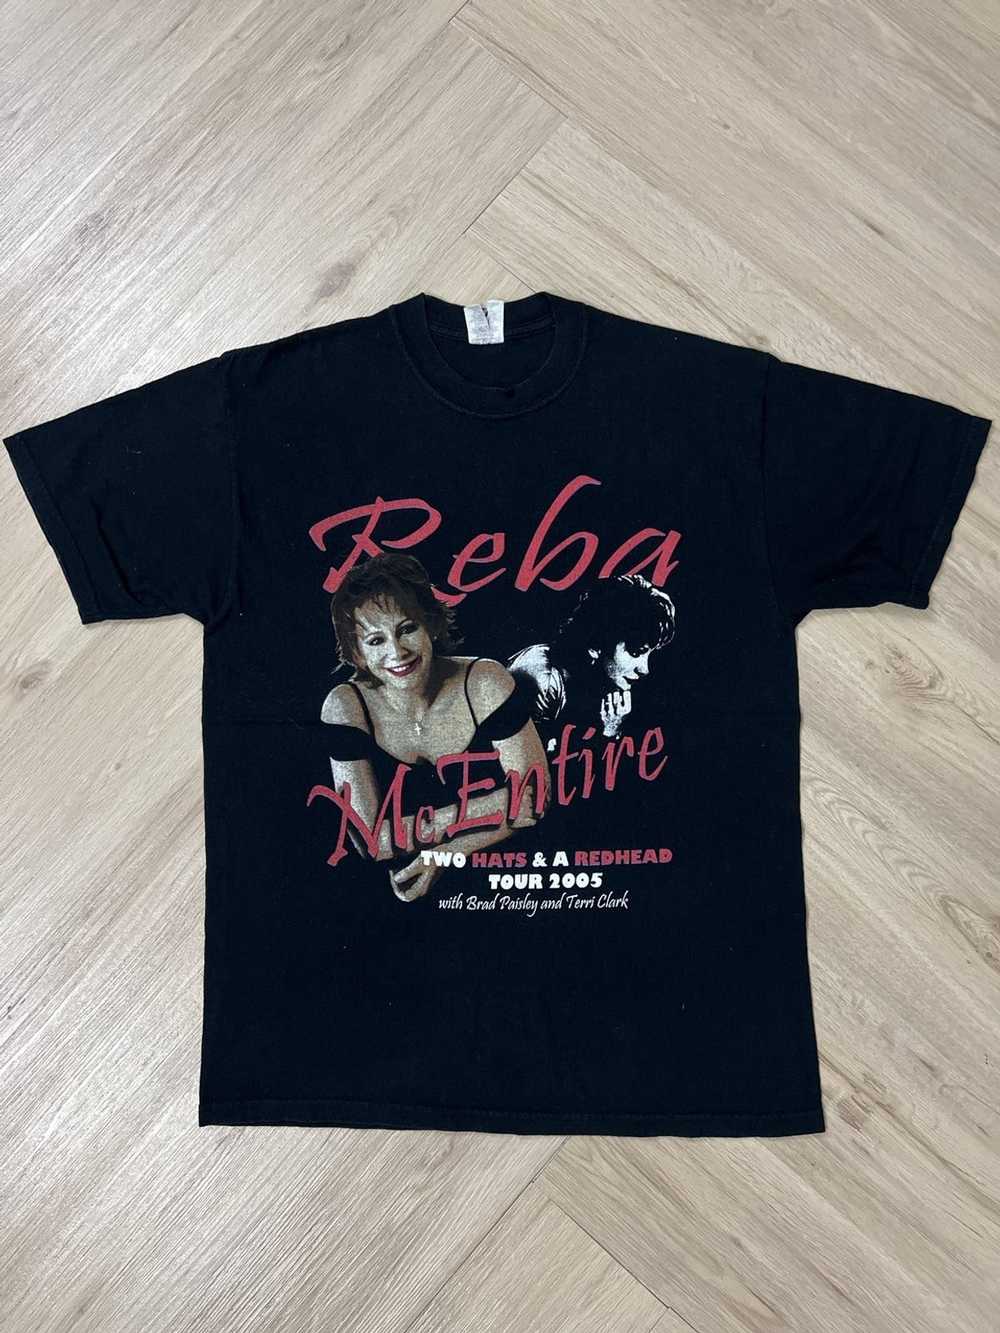 Band Tees × Vintage Vintage Reba Tour Shirt - image 1